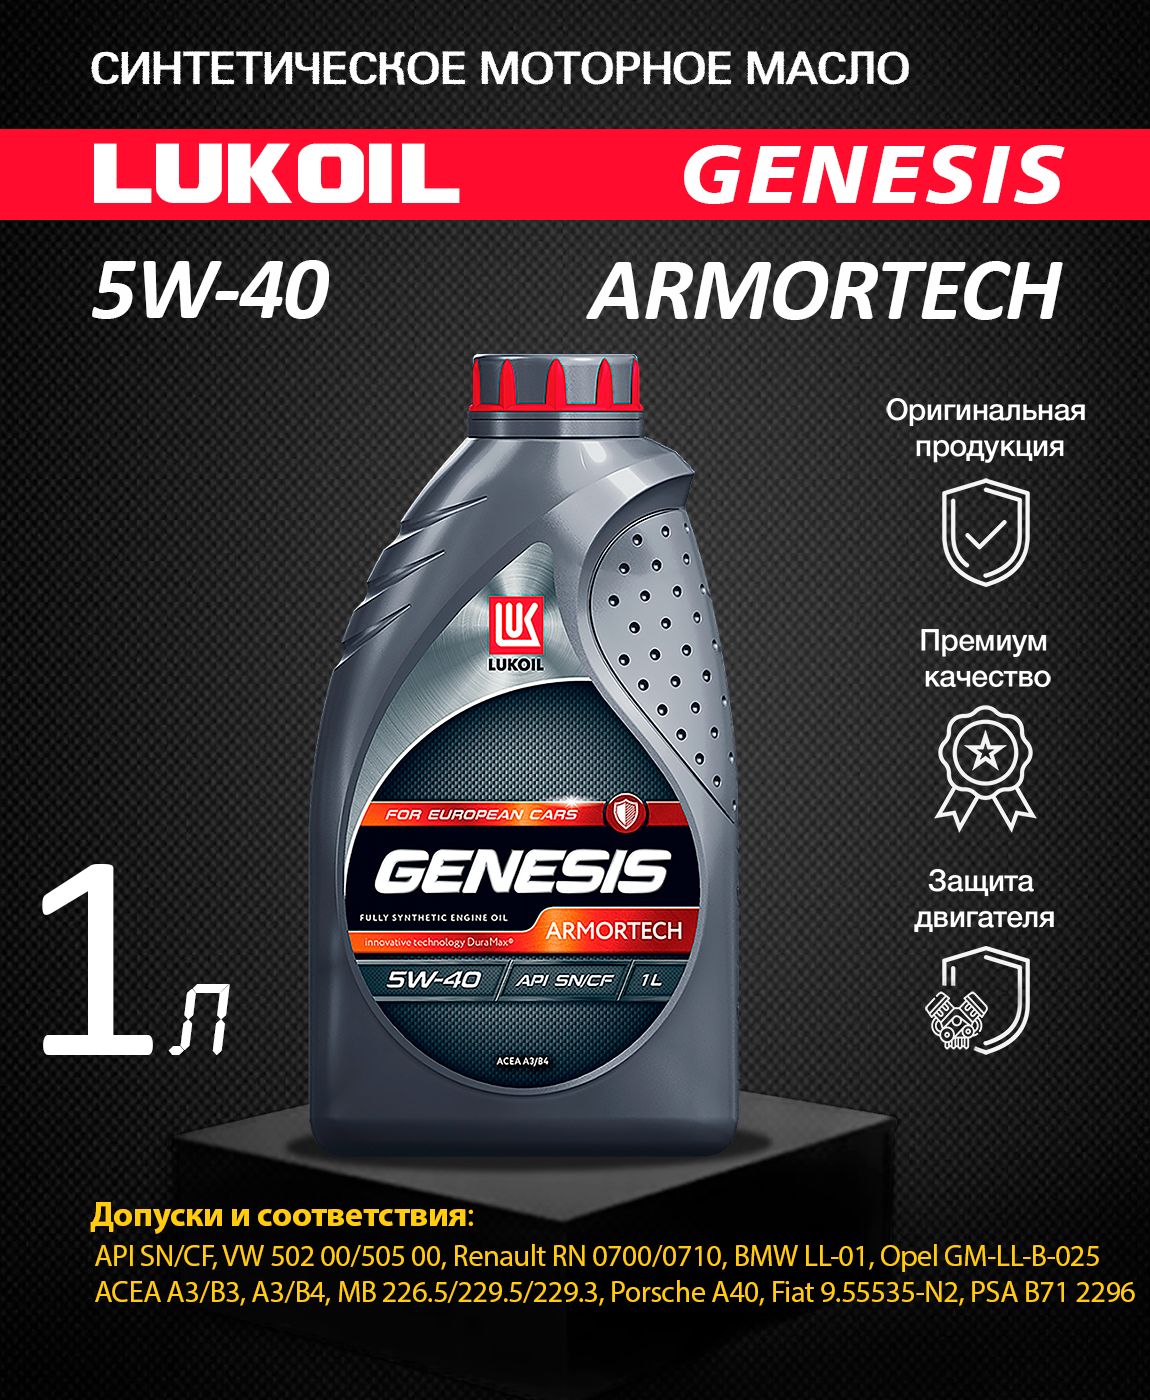 Лукойл Genesis Armortech 5w-40 1л. Lukoil Genesis Armortech 5w-40 1л. 1607013 Lukoil Genesis Armortech 5w-40 5л. Genesis Armortech for European cars 5w-40. Масло лукойл генезис 5w40 армотек